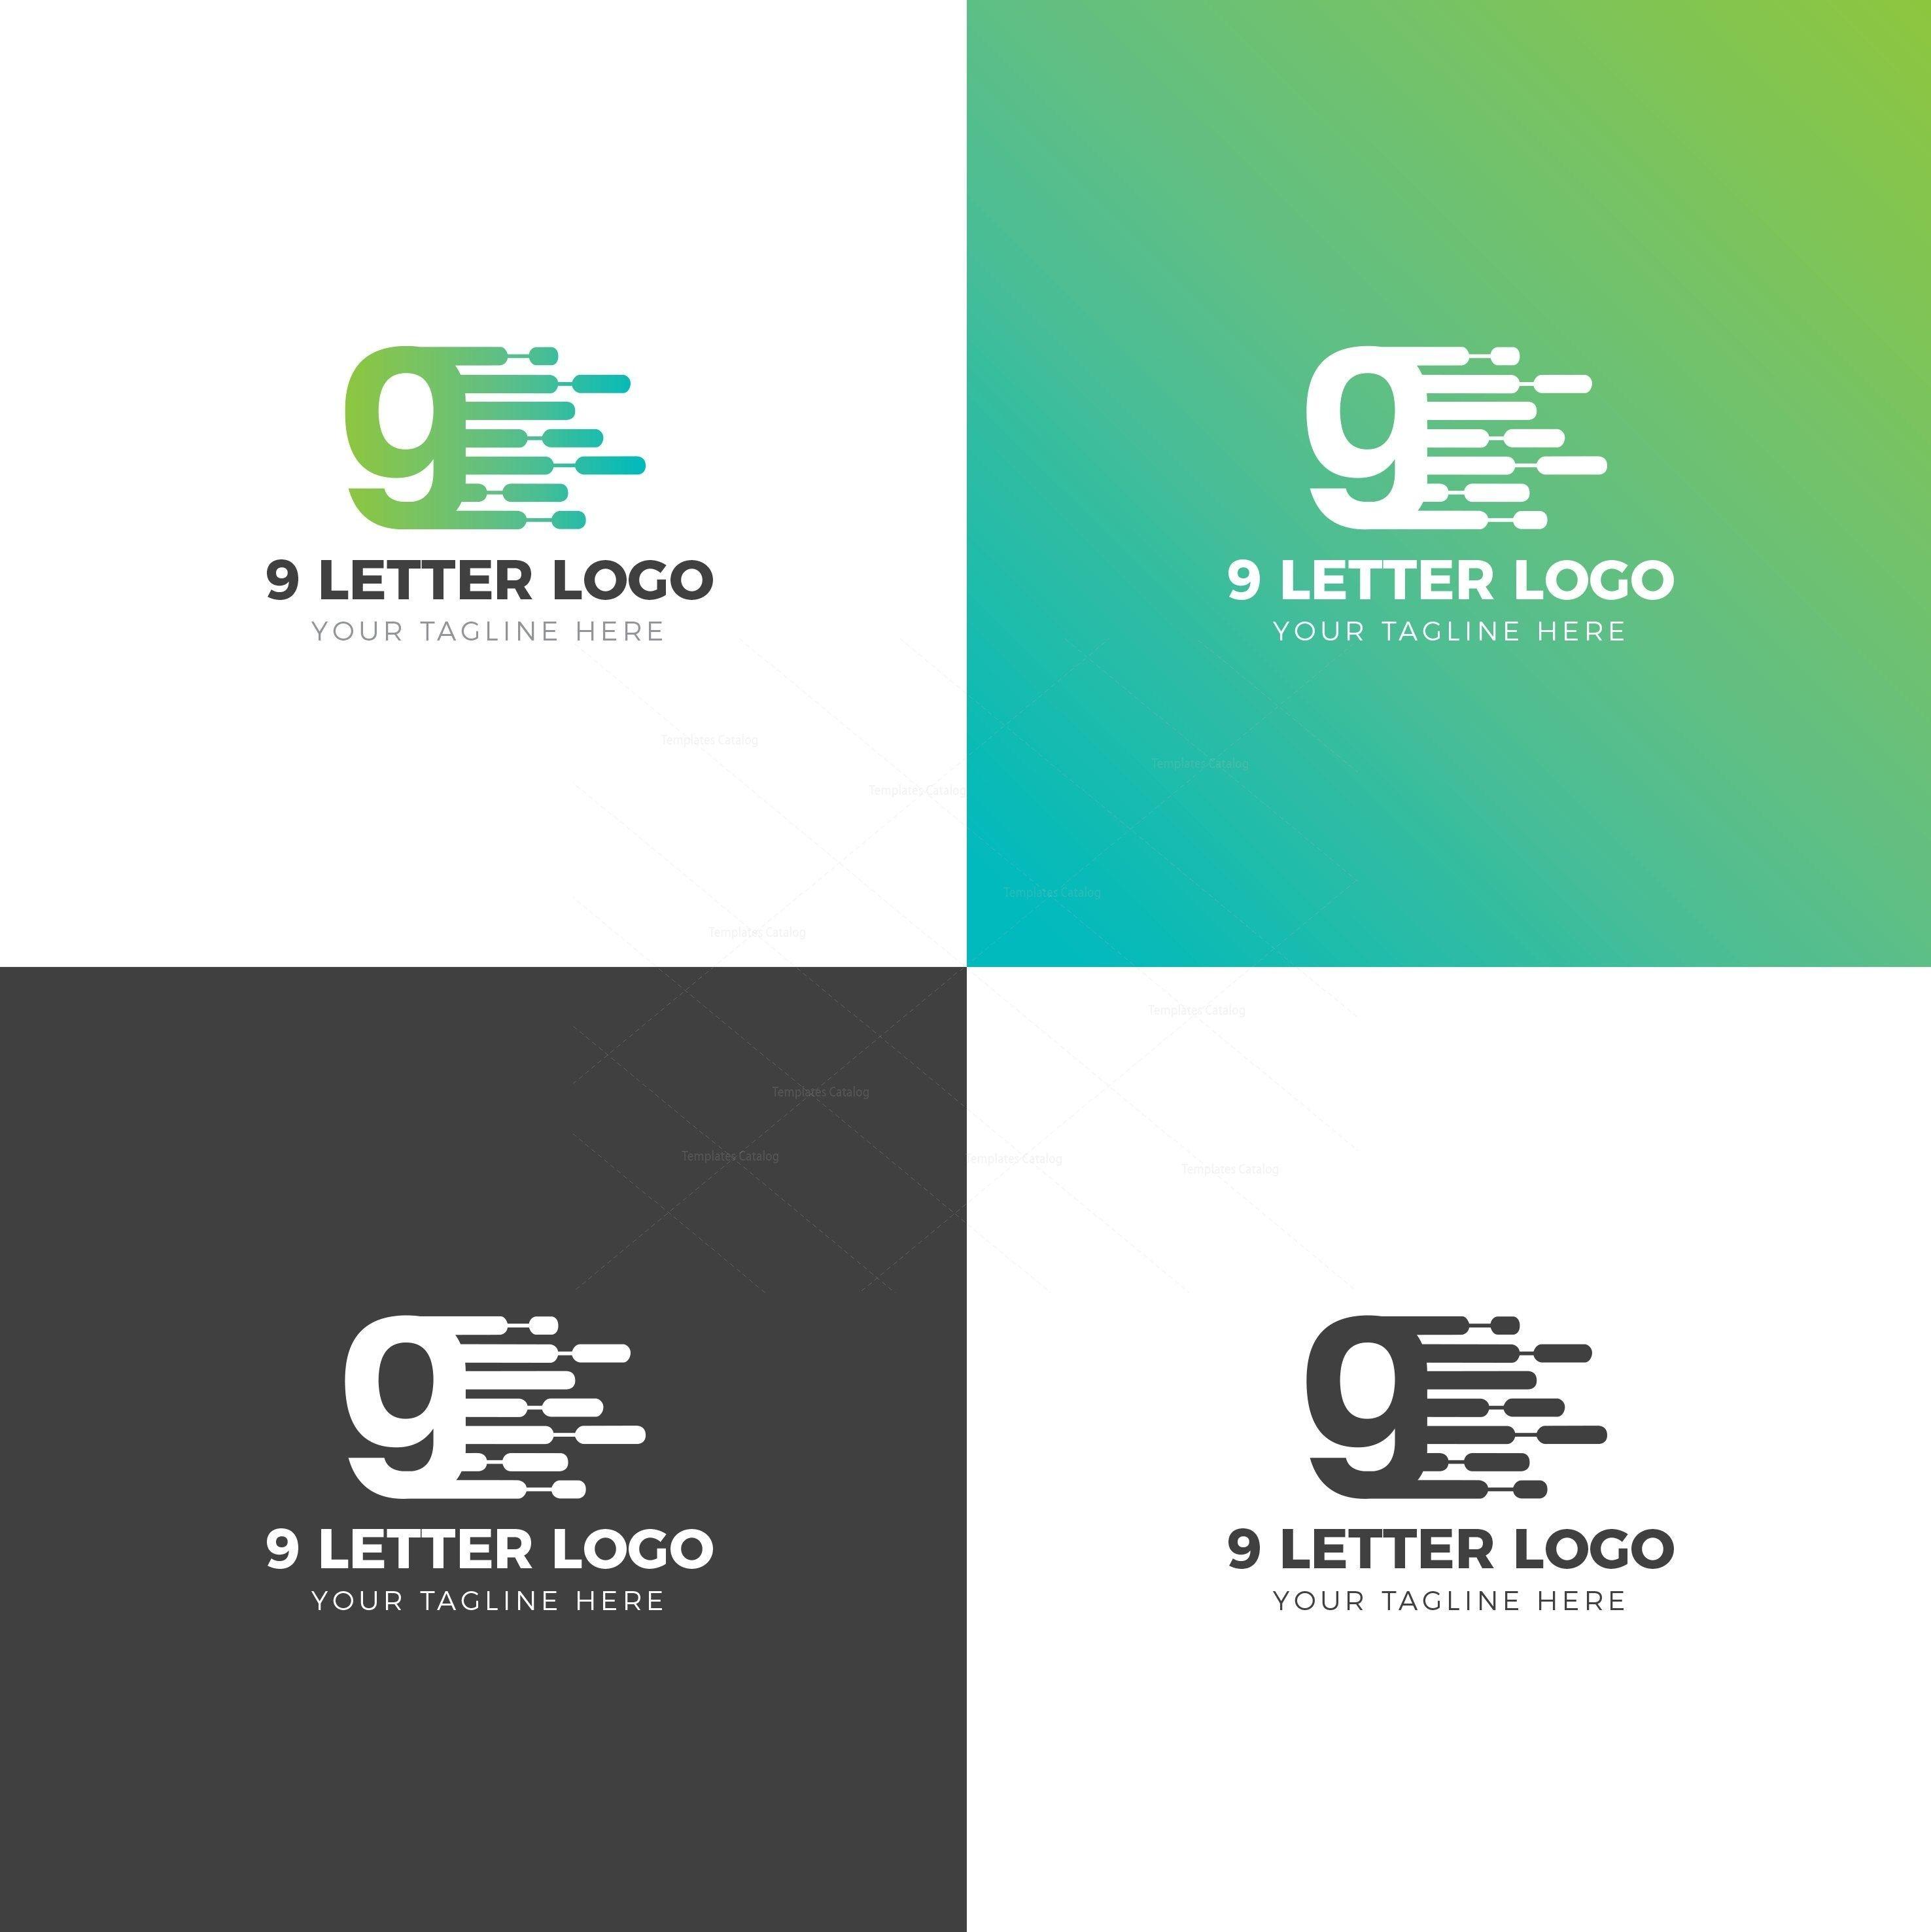 9 Letter Logo - 9 Number Creative Logo Design Template 002041 - Template Catalog